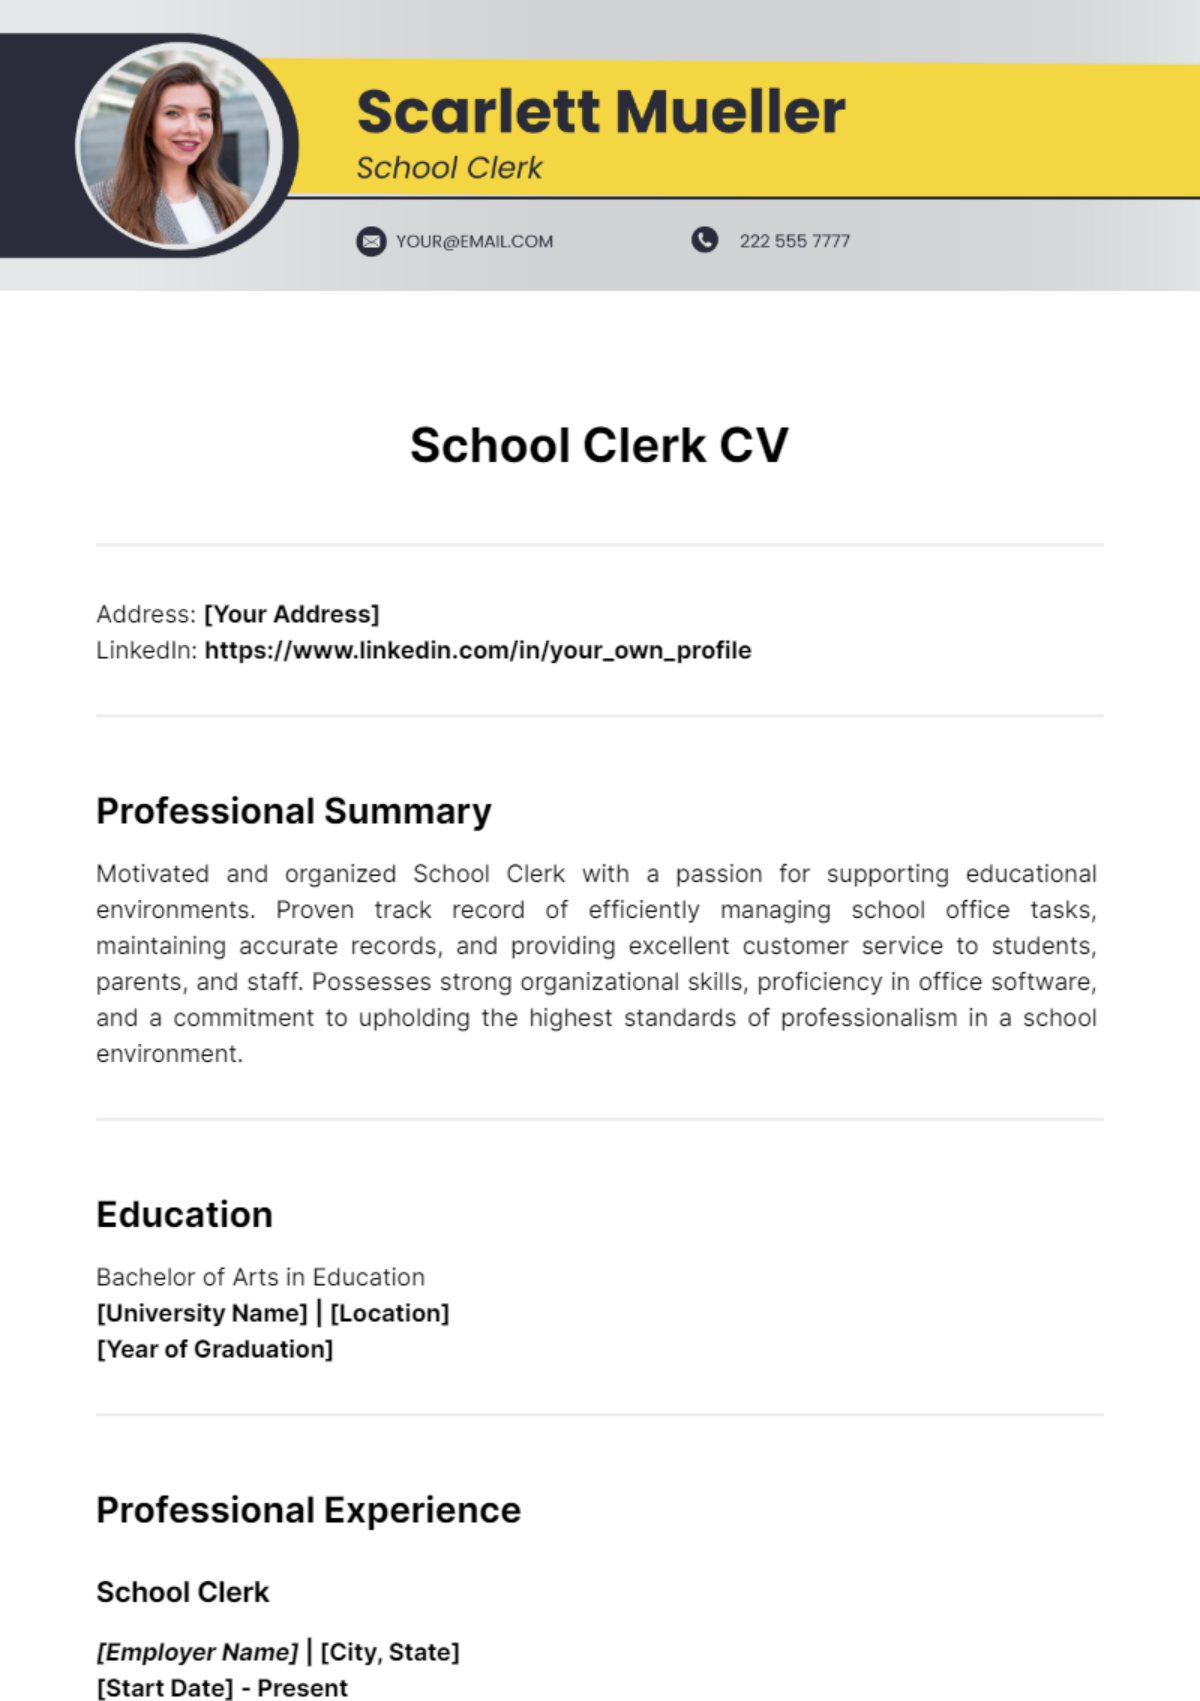 School Clerk CV Template